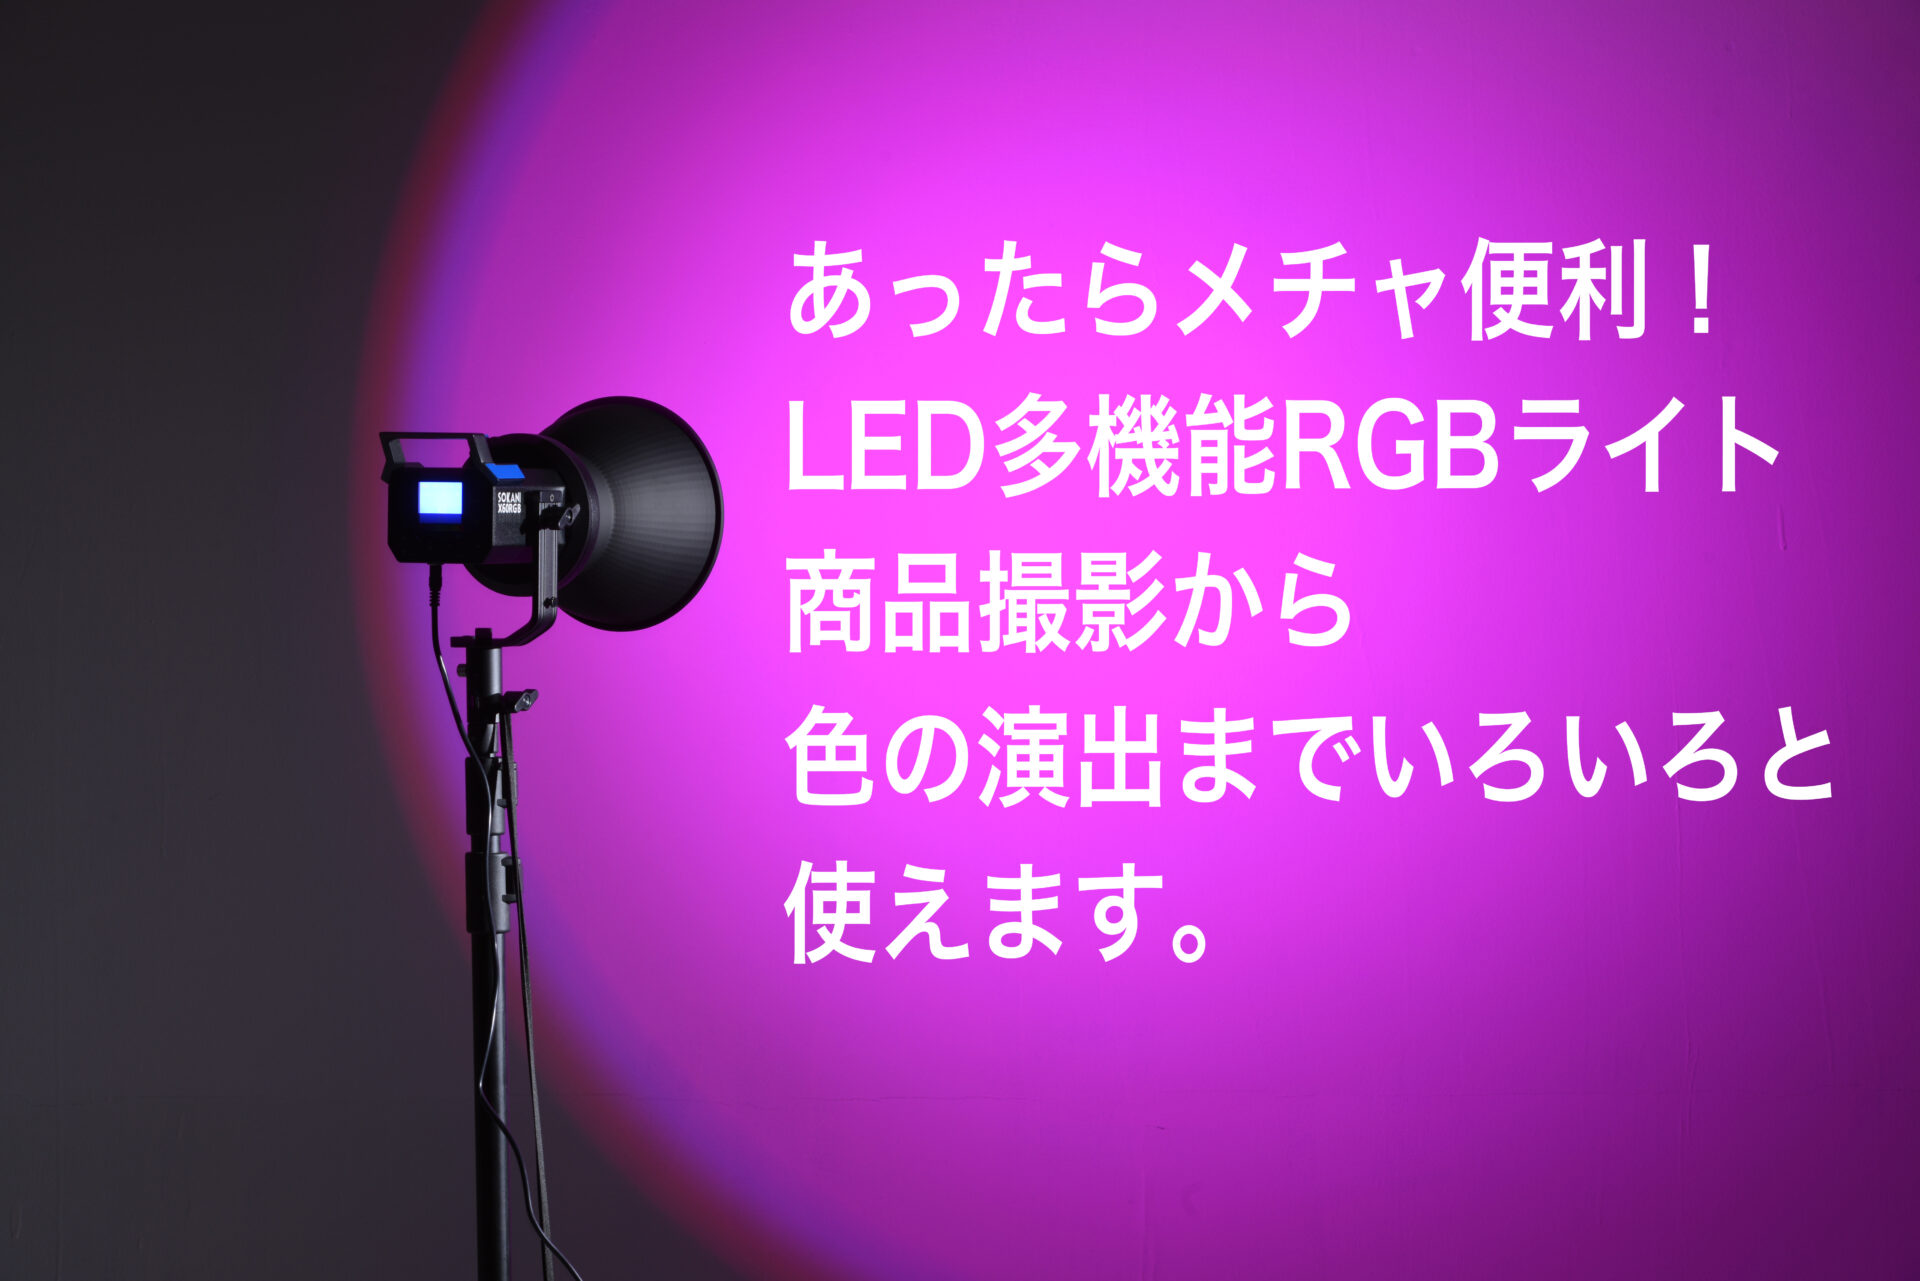 SOKANI X60 RGBは1本目に買うLED照明としてオススメです